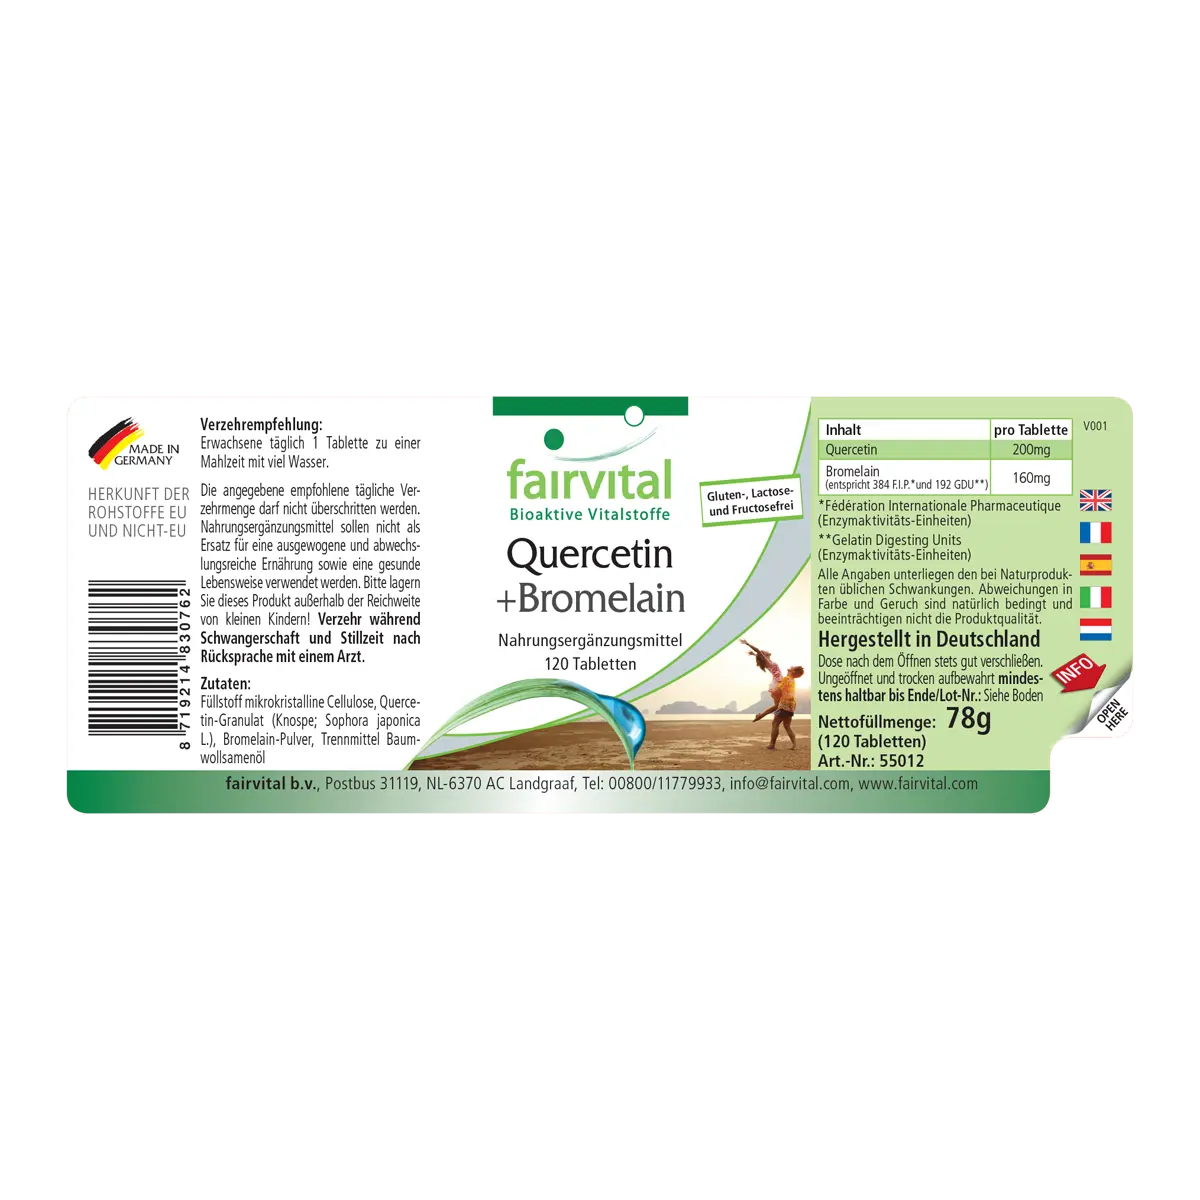 Quercetine plus Bromelaïne - 120 Tabletten